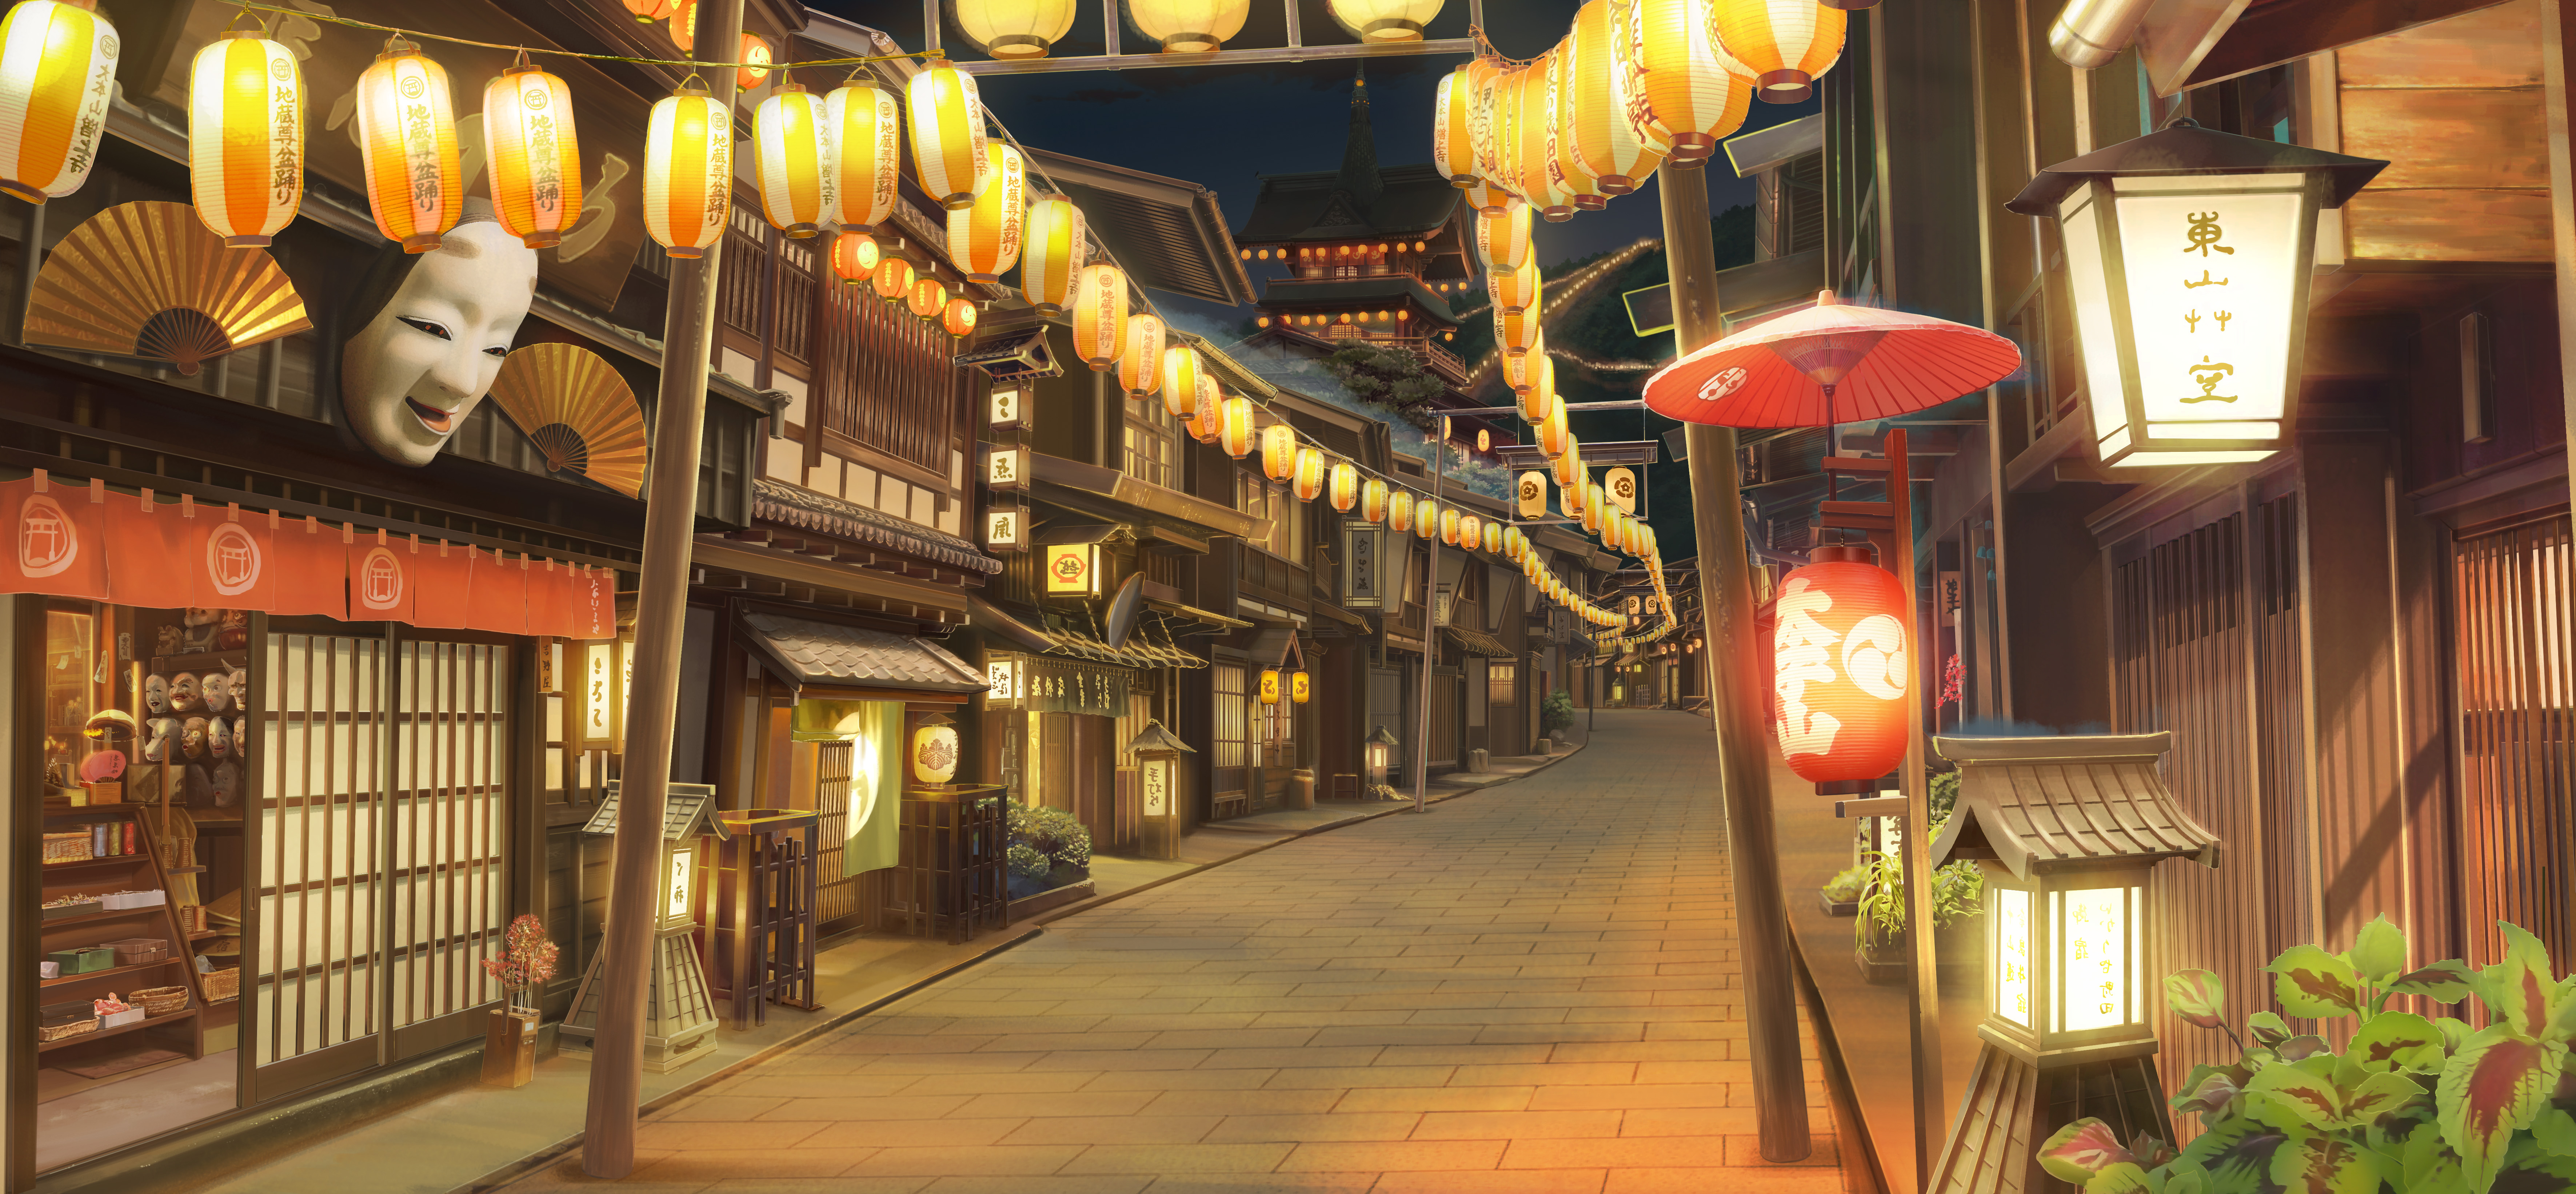 General 7083x3282 digital art artwork illustration environment Japan street architecture street light paper lantern lantern mask umbrella night